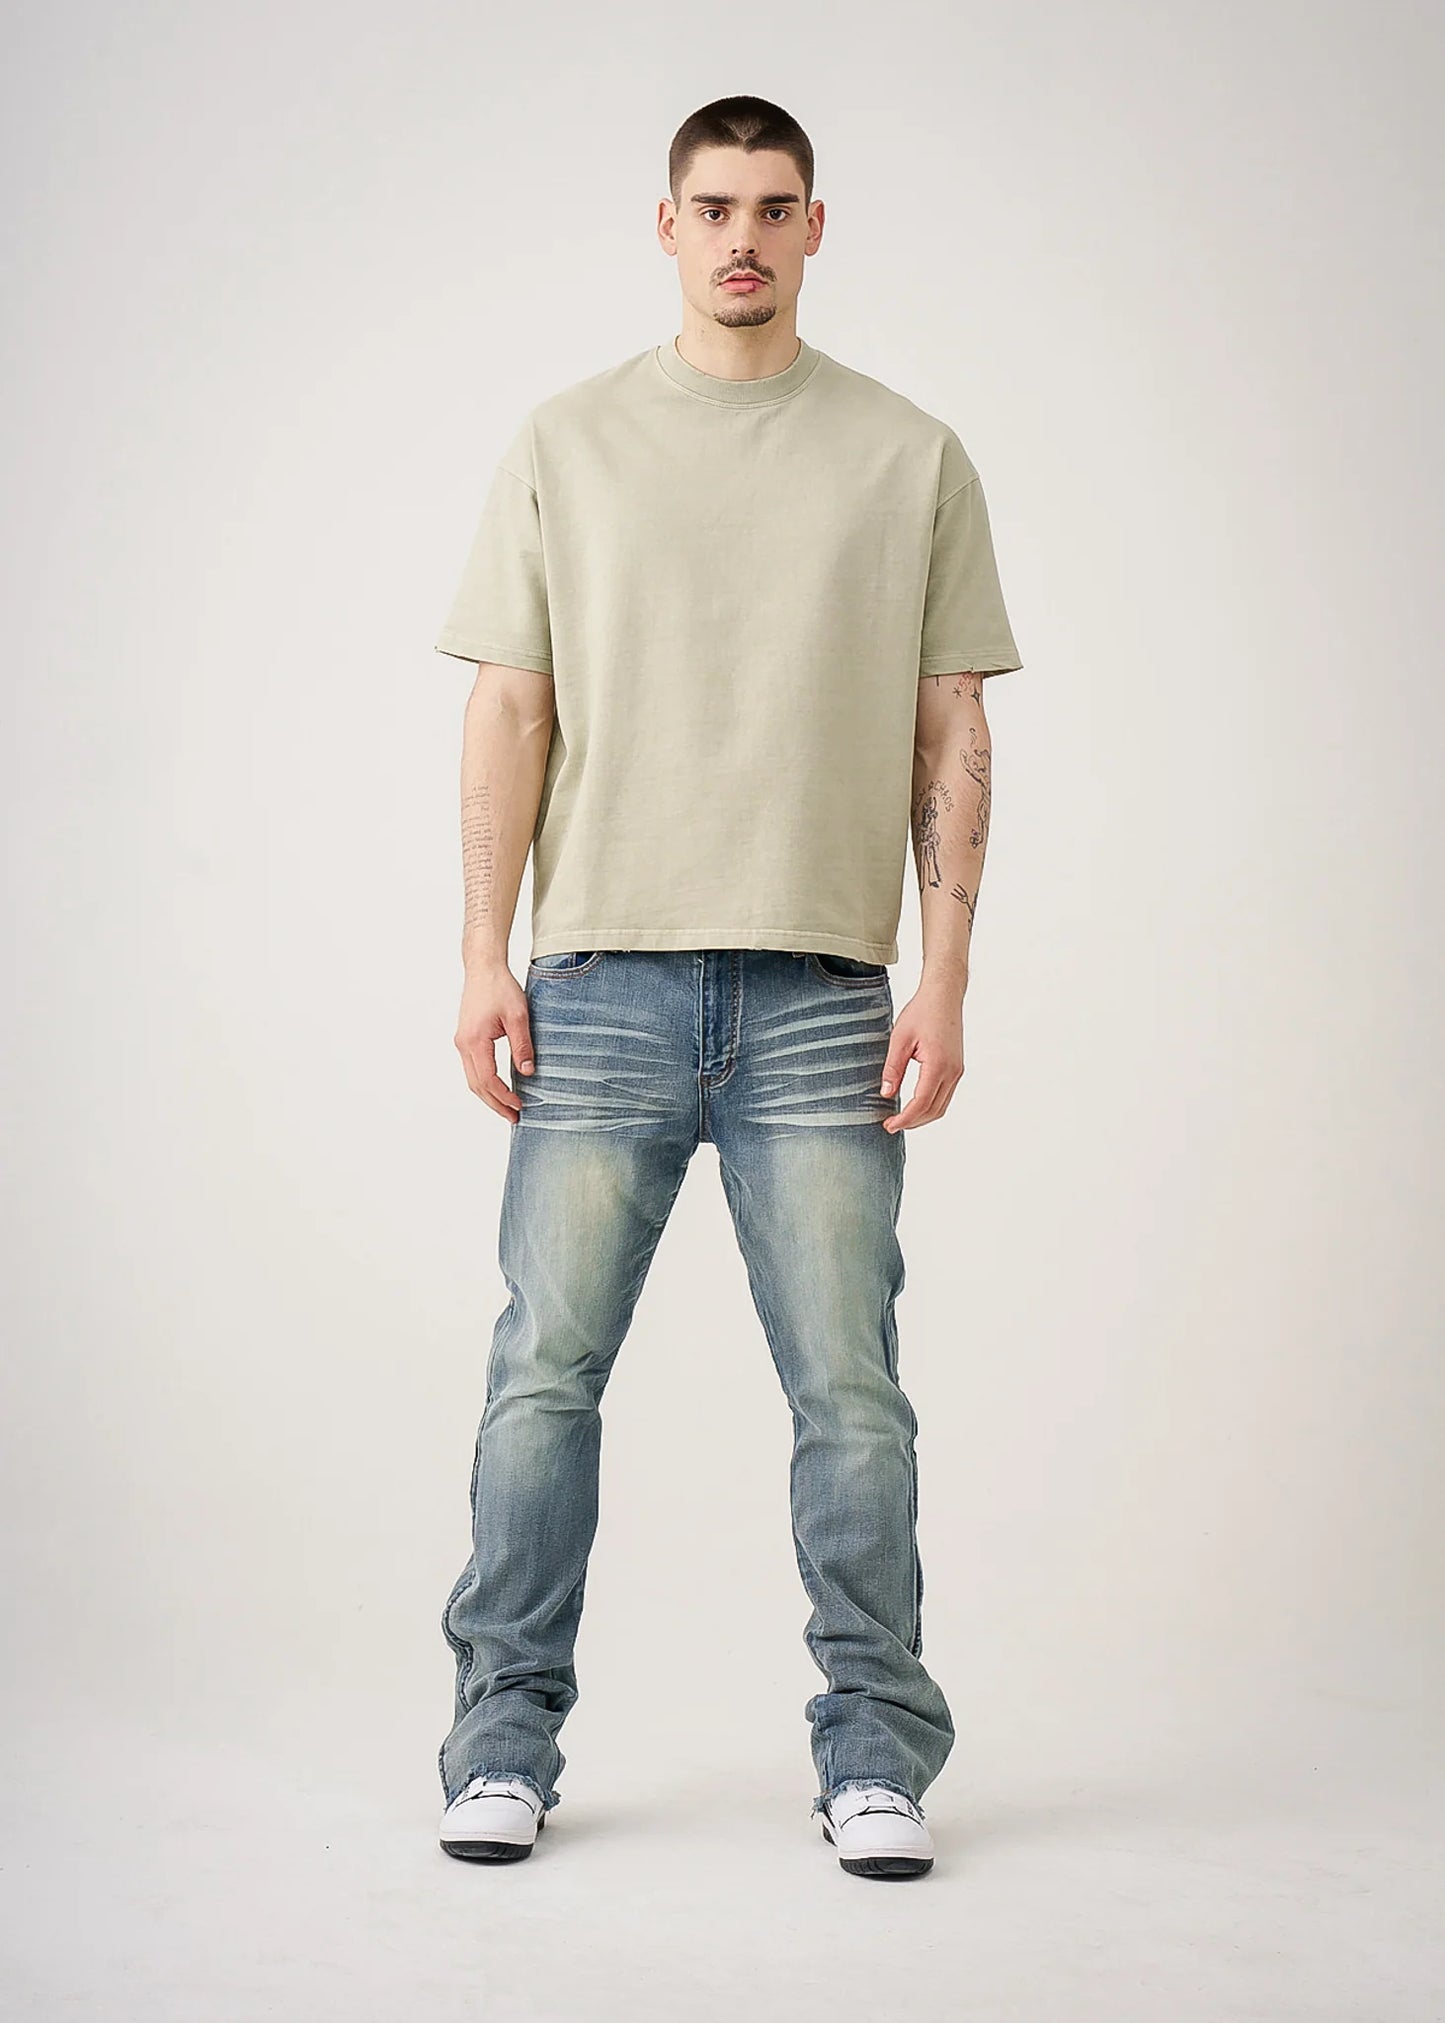 Khaki 10 oz Oversized Garment Dye French Terry Distressed T-Shirt